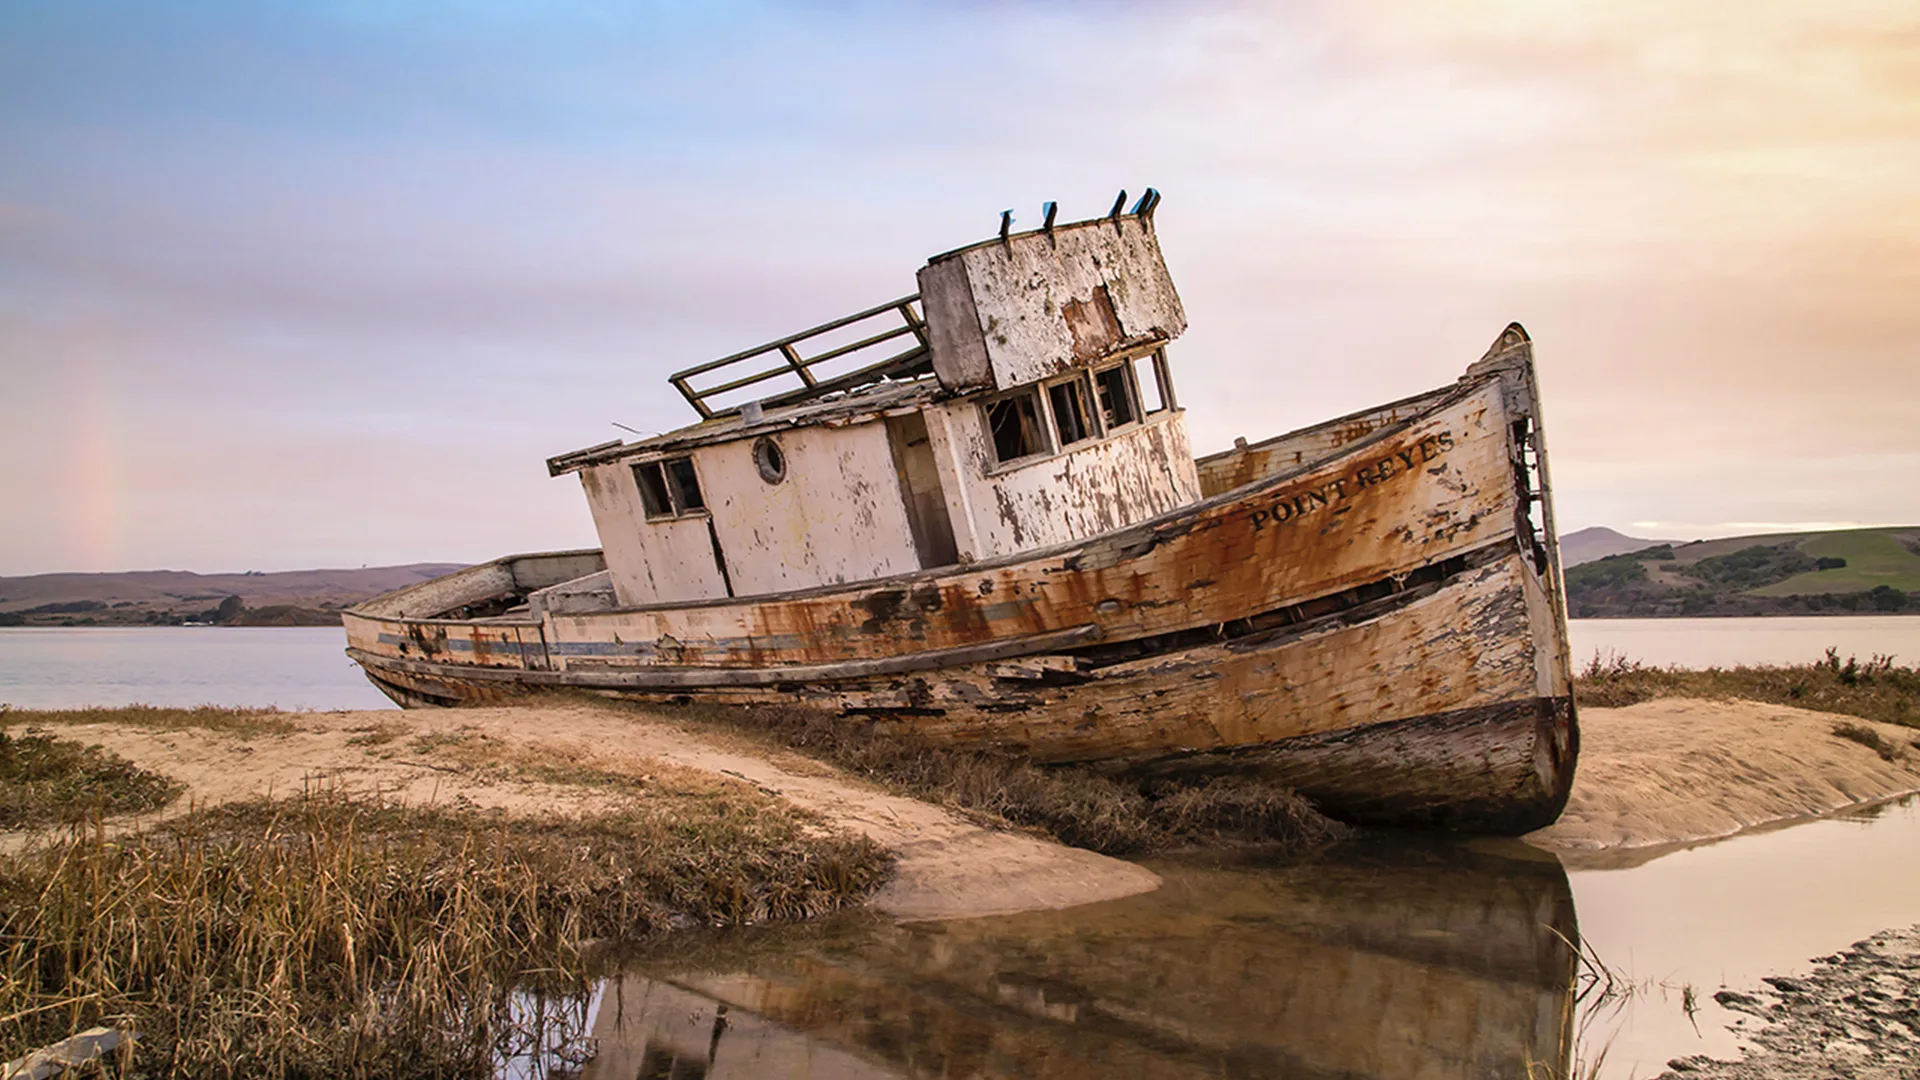 A shipwrecked boat